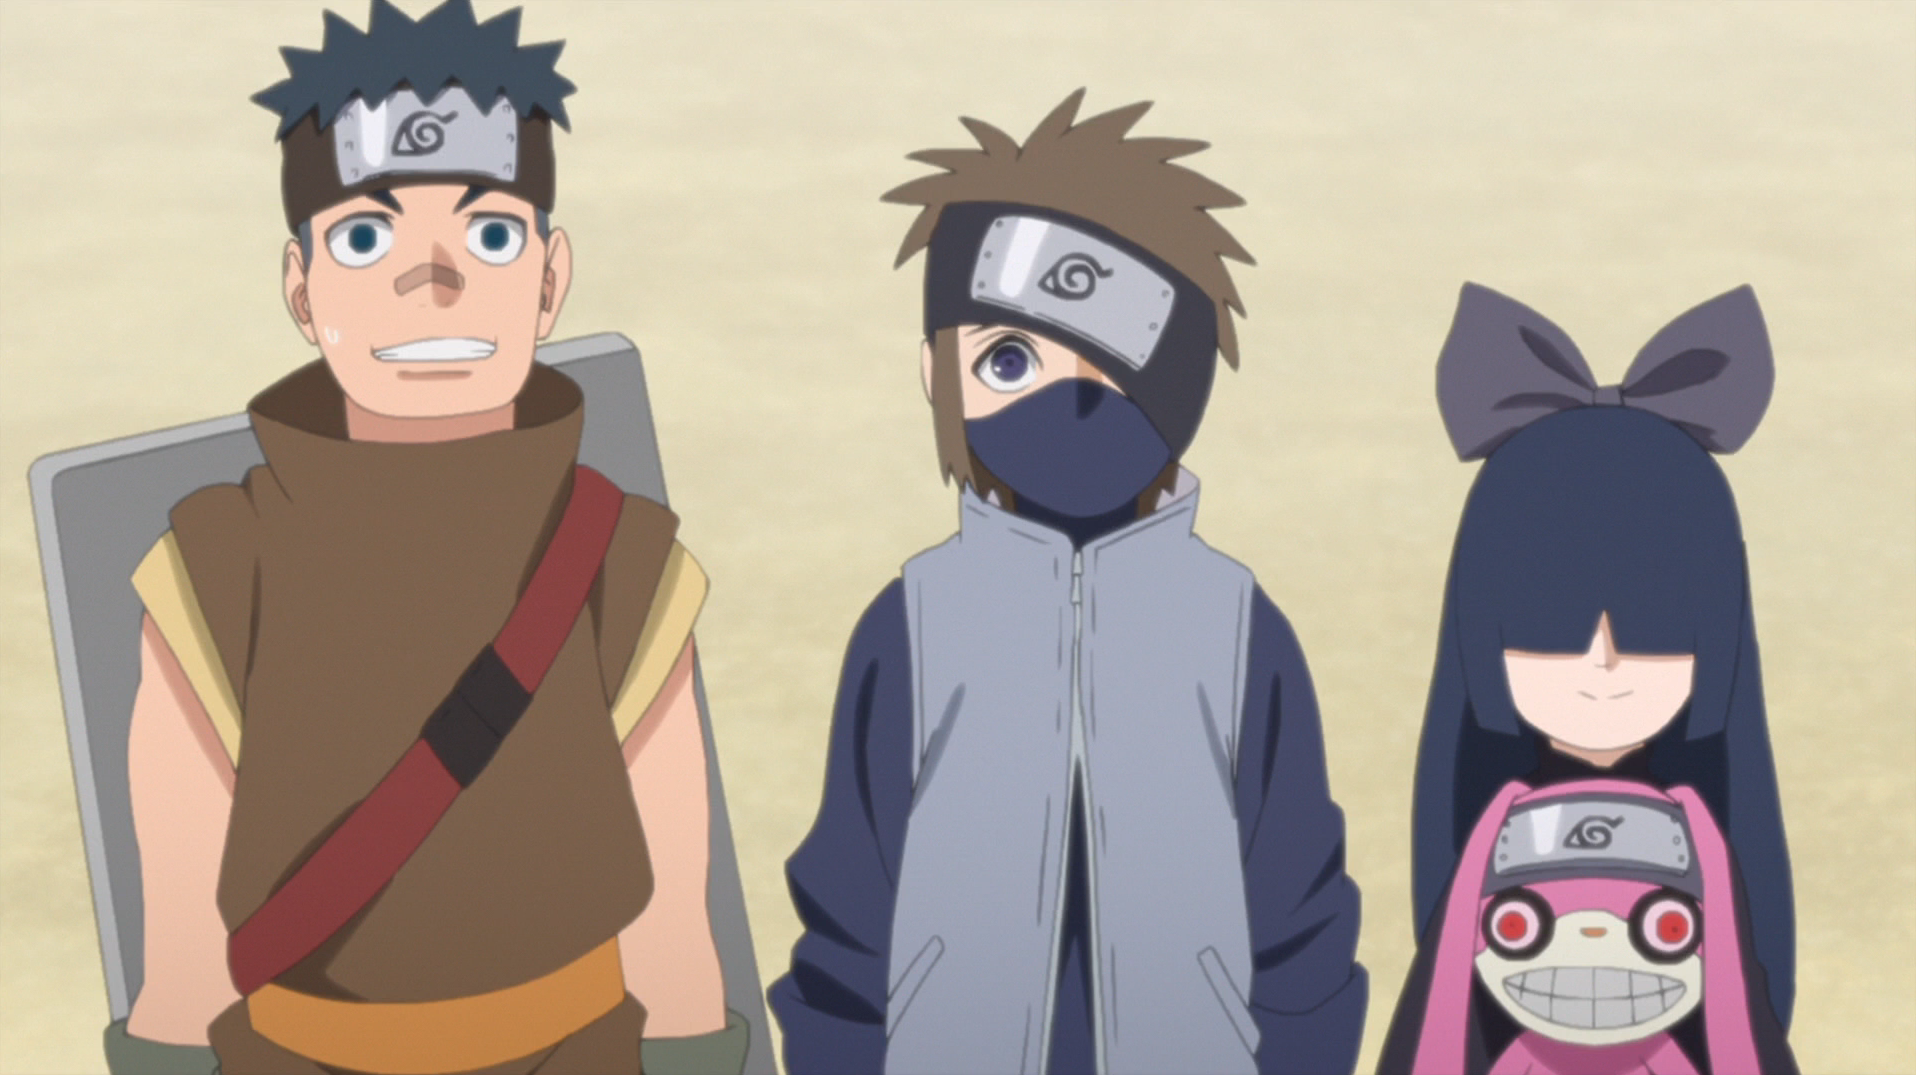 Boruto: Naruto Next Generations – Episódio 115